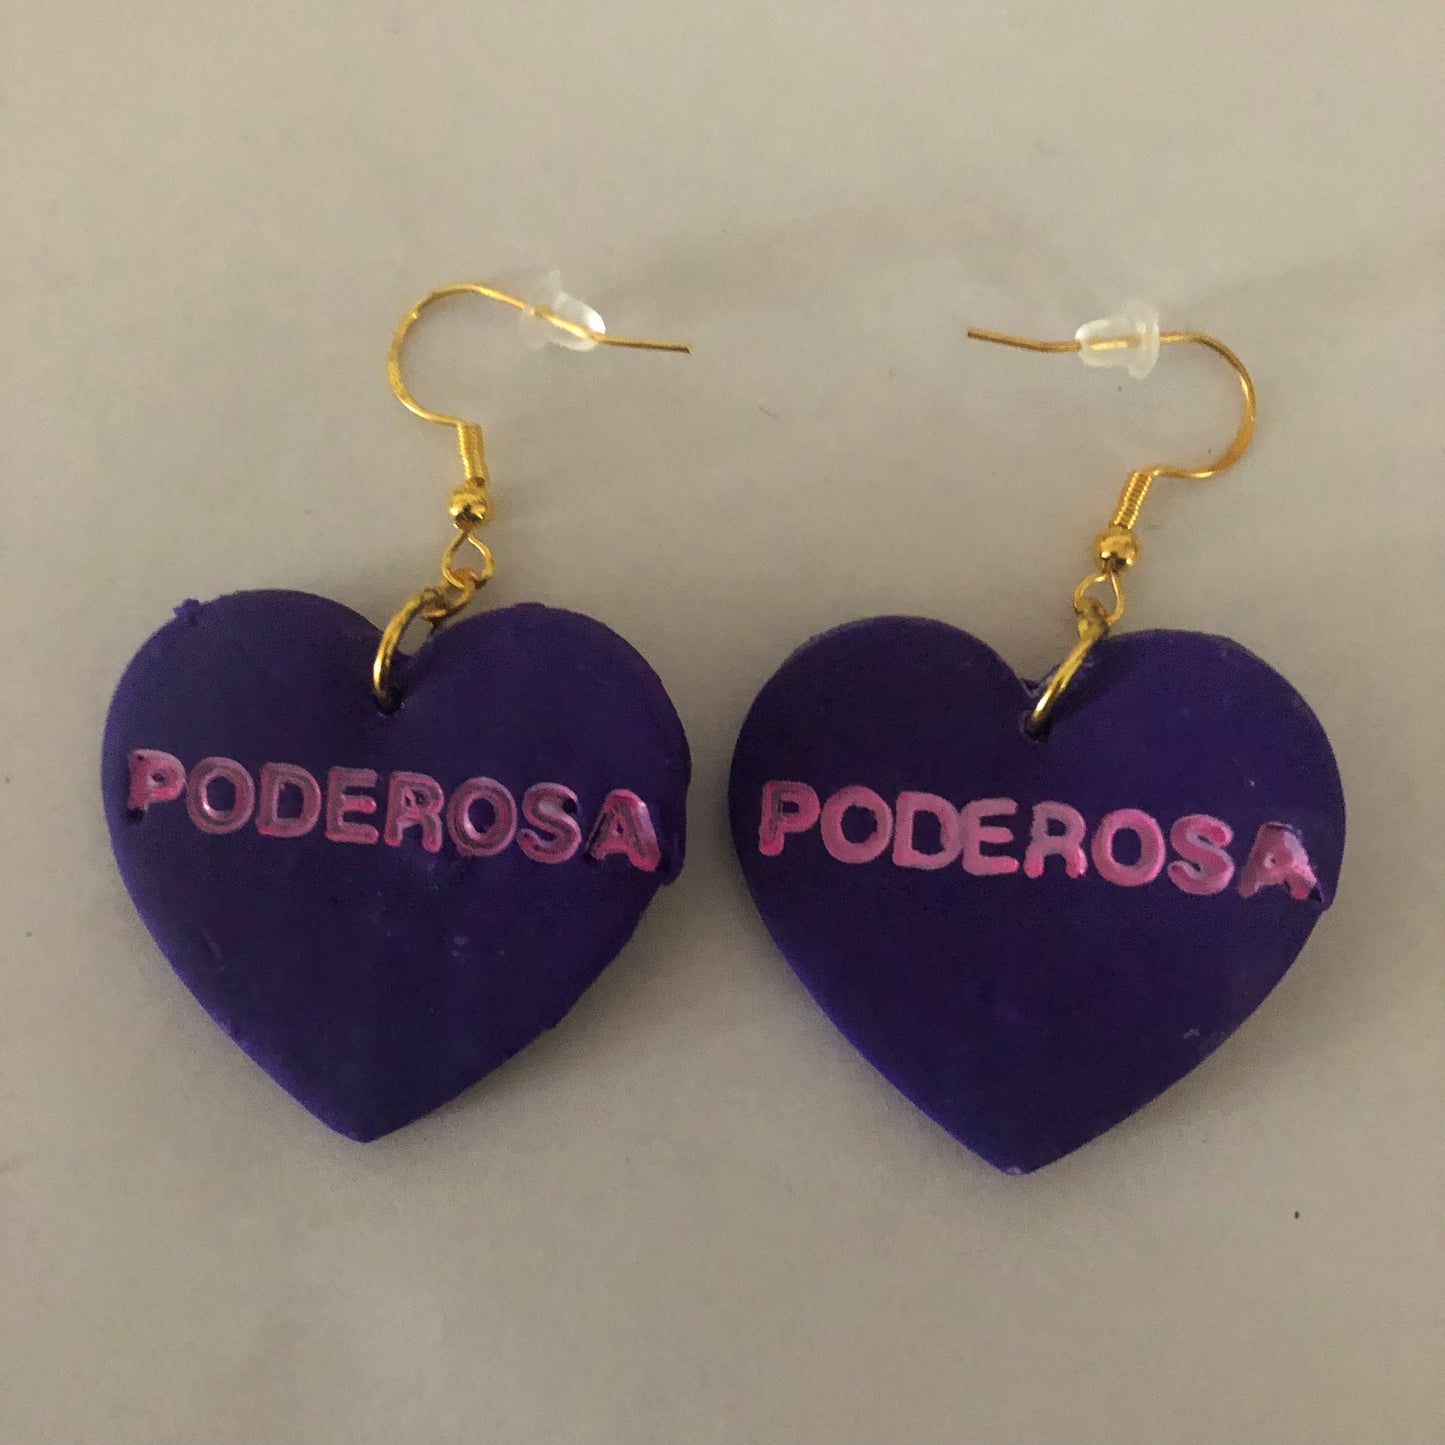 Poderosa polymer clay heart-shaped earrings